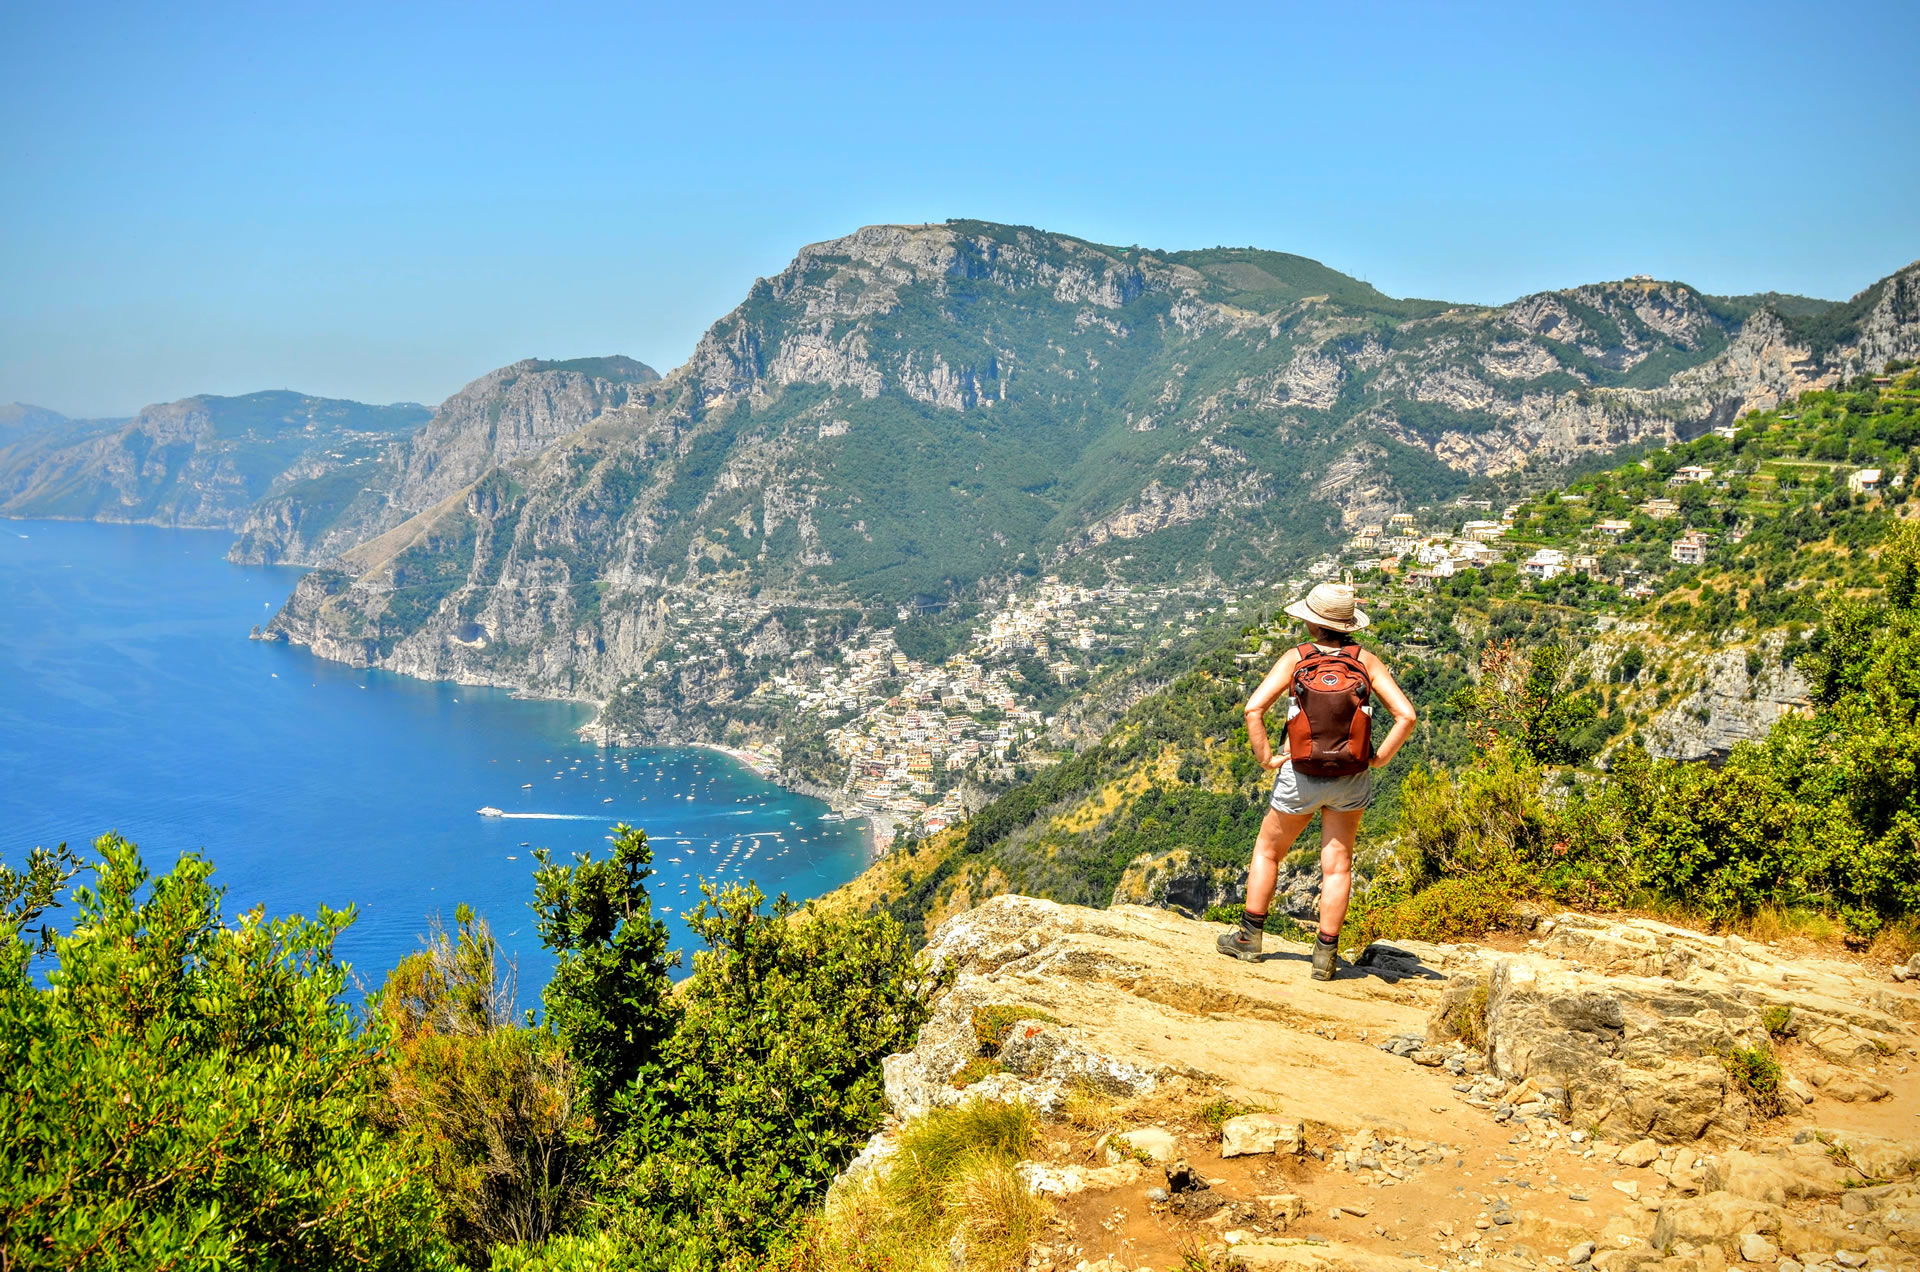 ICNOS Adventures an Italian tour operator based on the Amalfi Coast